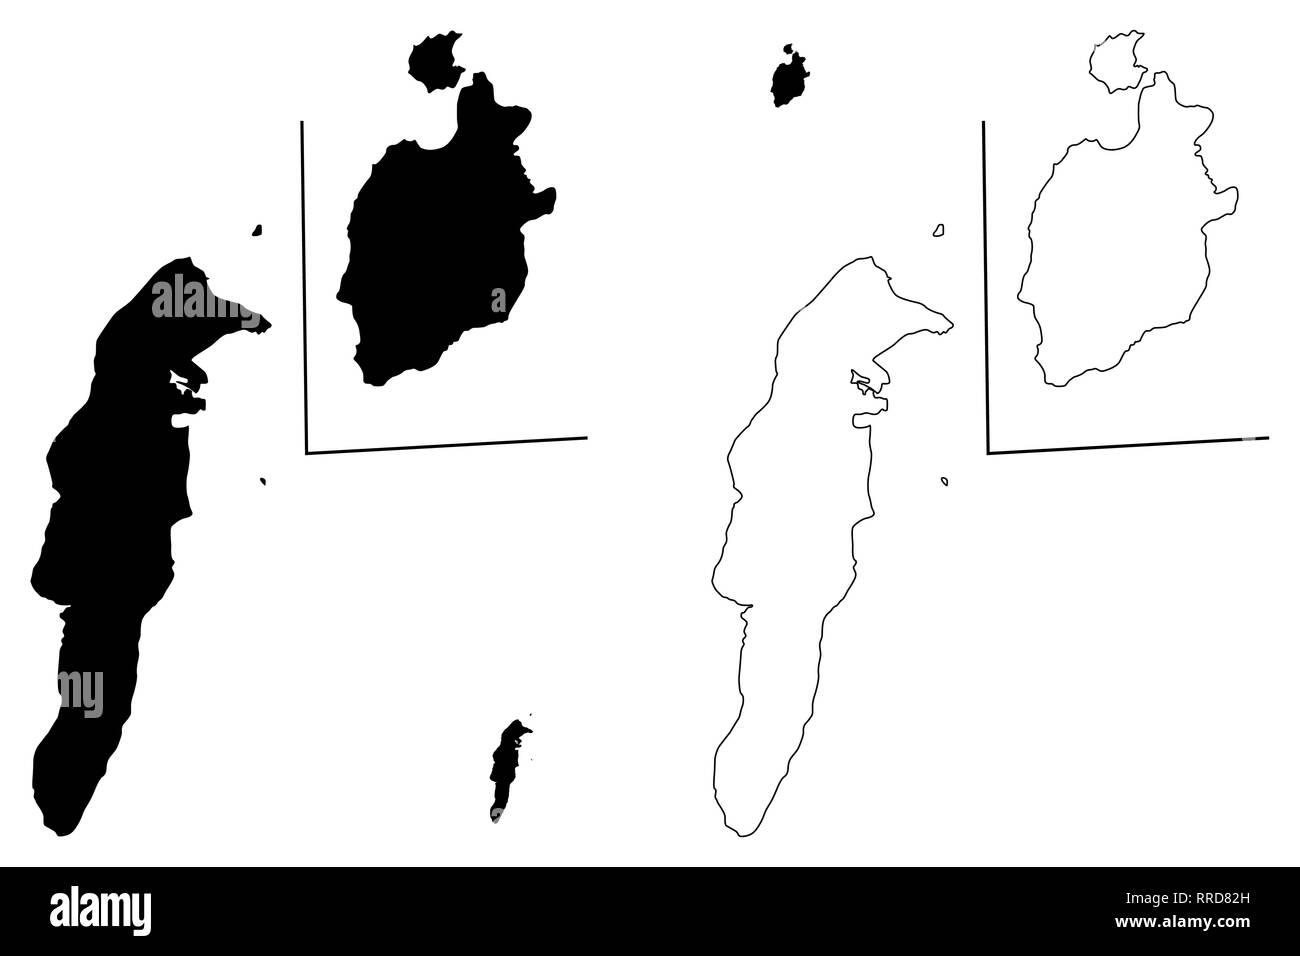 Archipel von San Andres und Providencia und Santa Catalina (Kolumbien, Republik Kolumbien, Abteilungen von Kolumbien) Karte Vektor-illustration, Kritzeln Stock Vektor